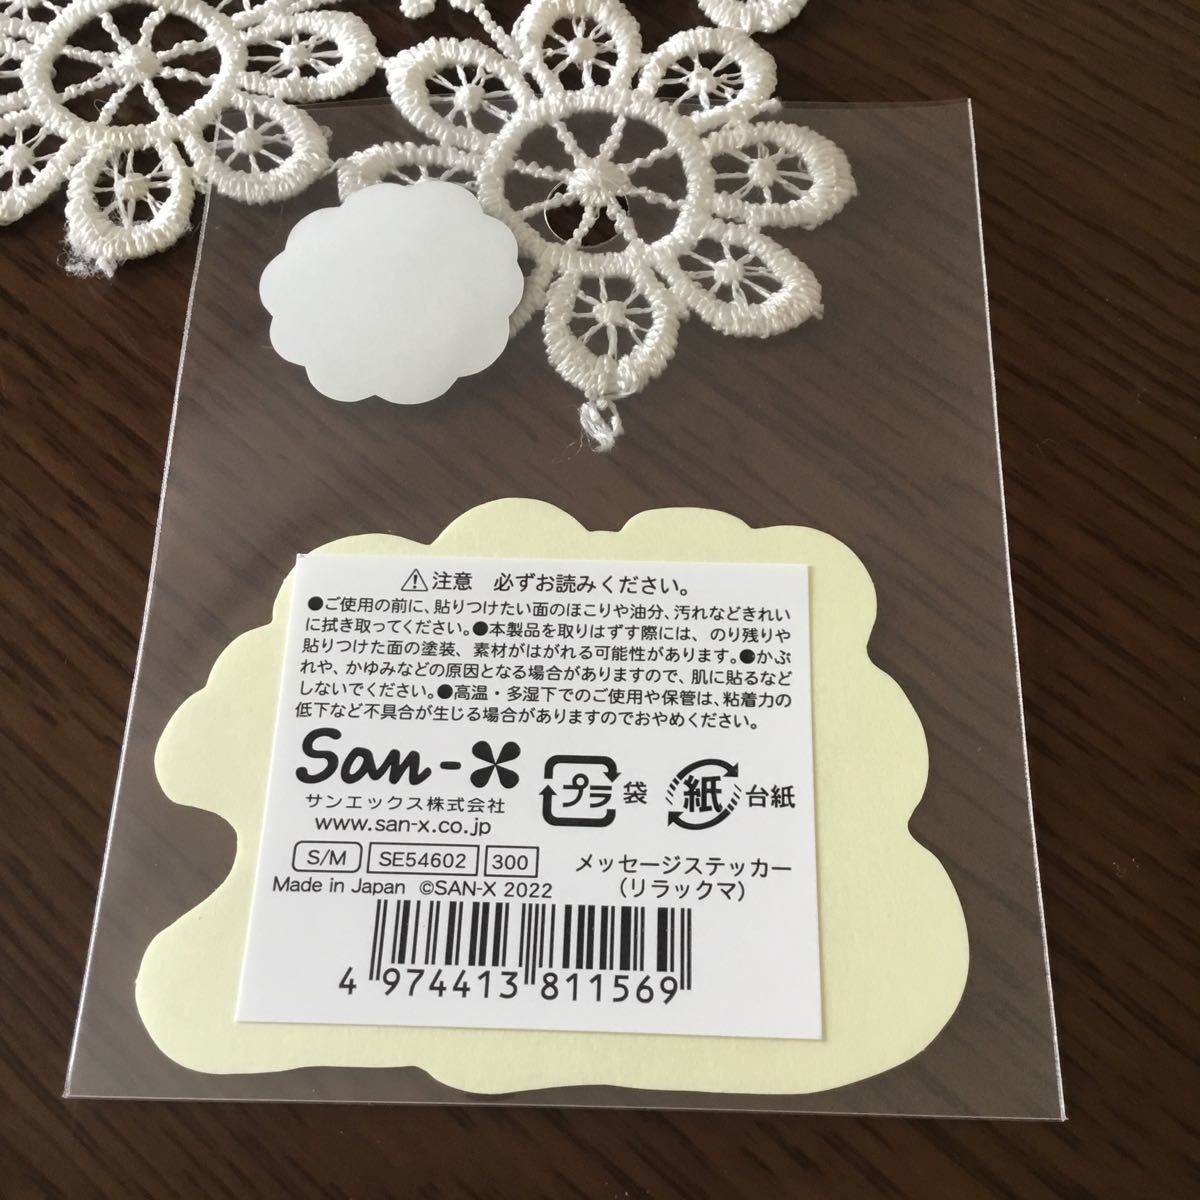  Rilakkuma sticker seal waterproof UV processing coating seal postage 84 jpy new goods message sticker ......